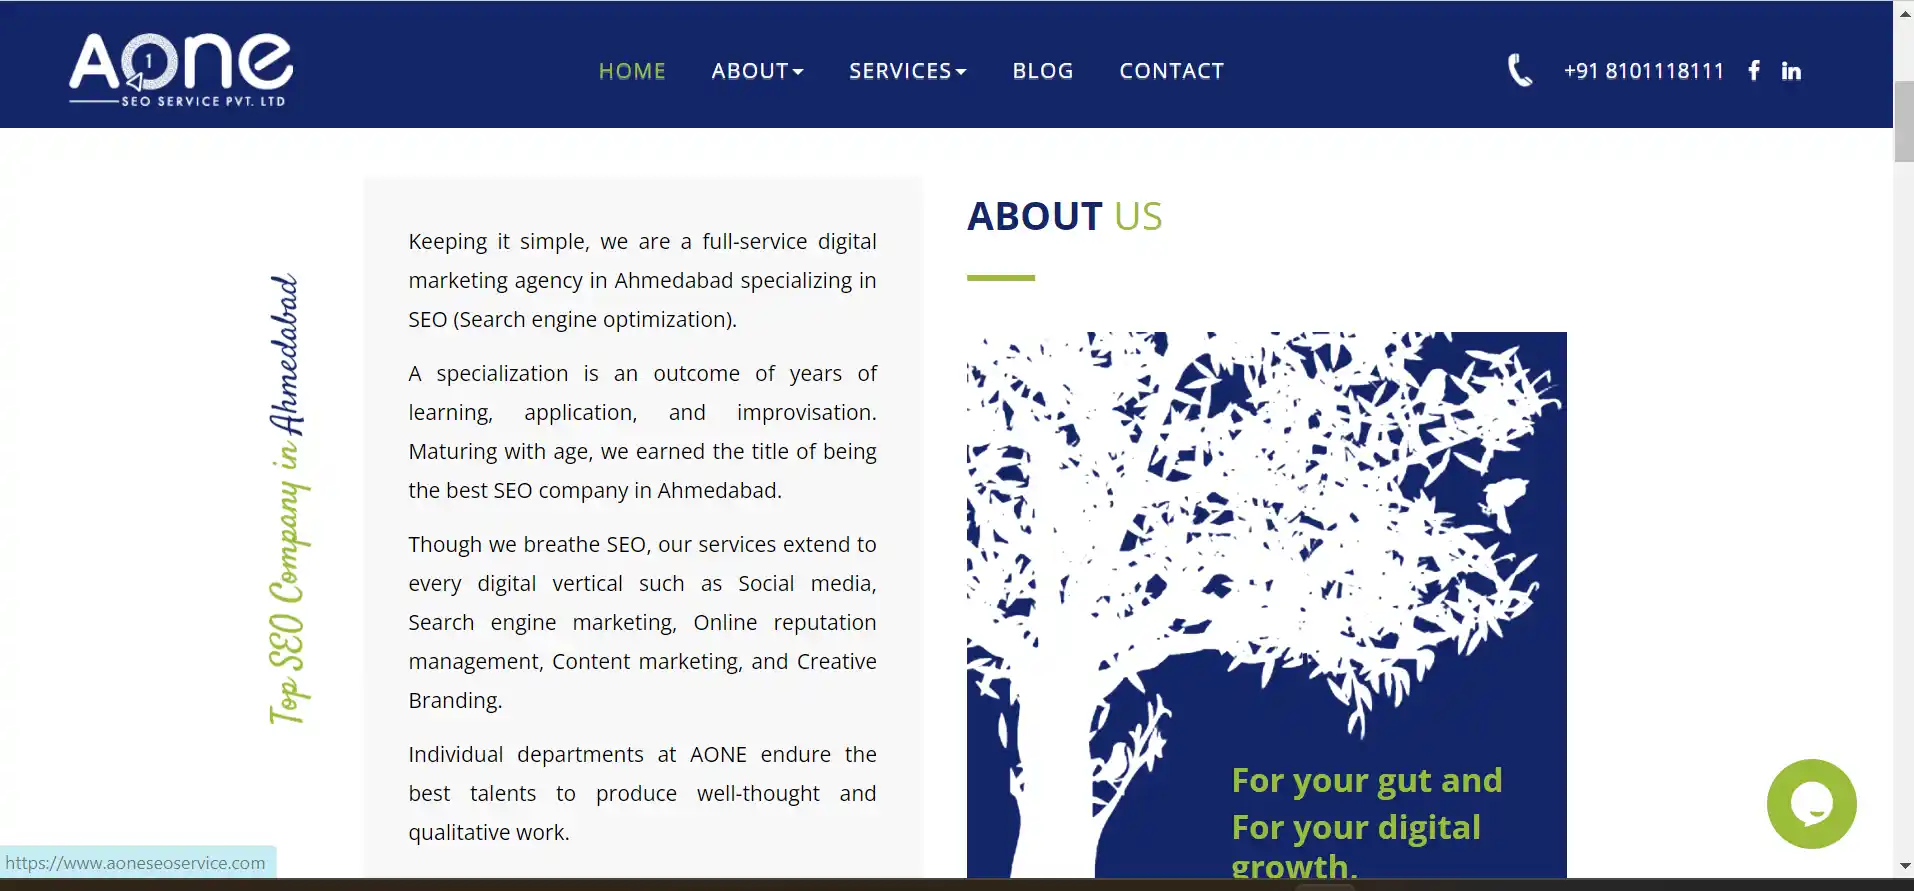 AONE-Service-Homepage